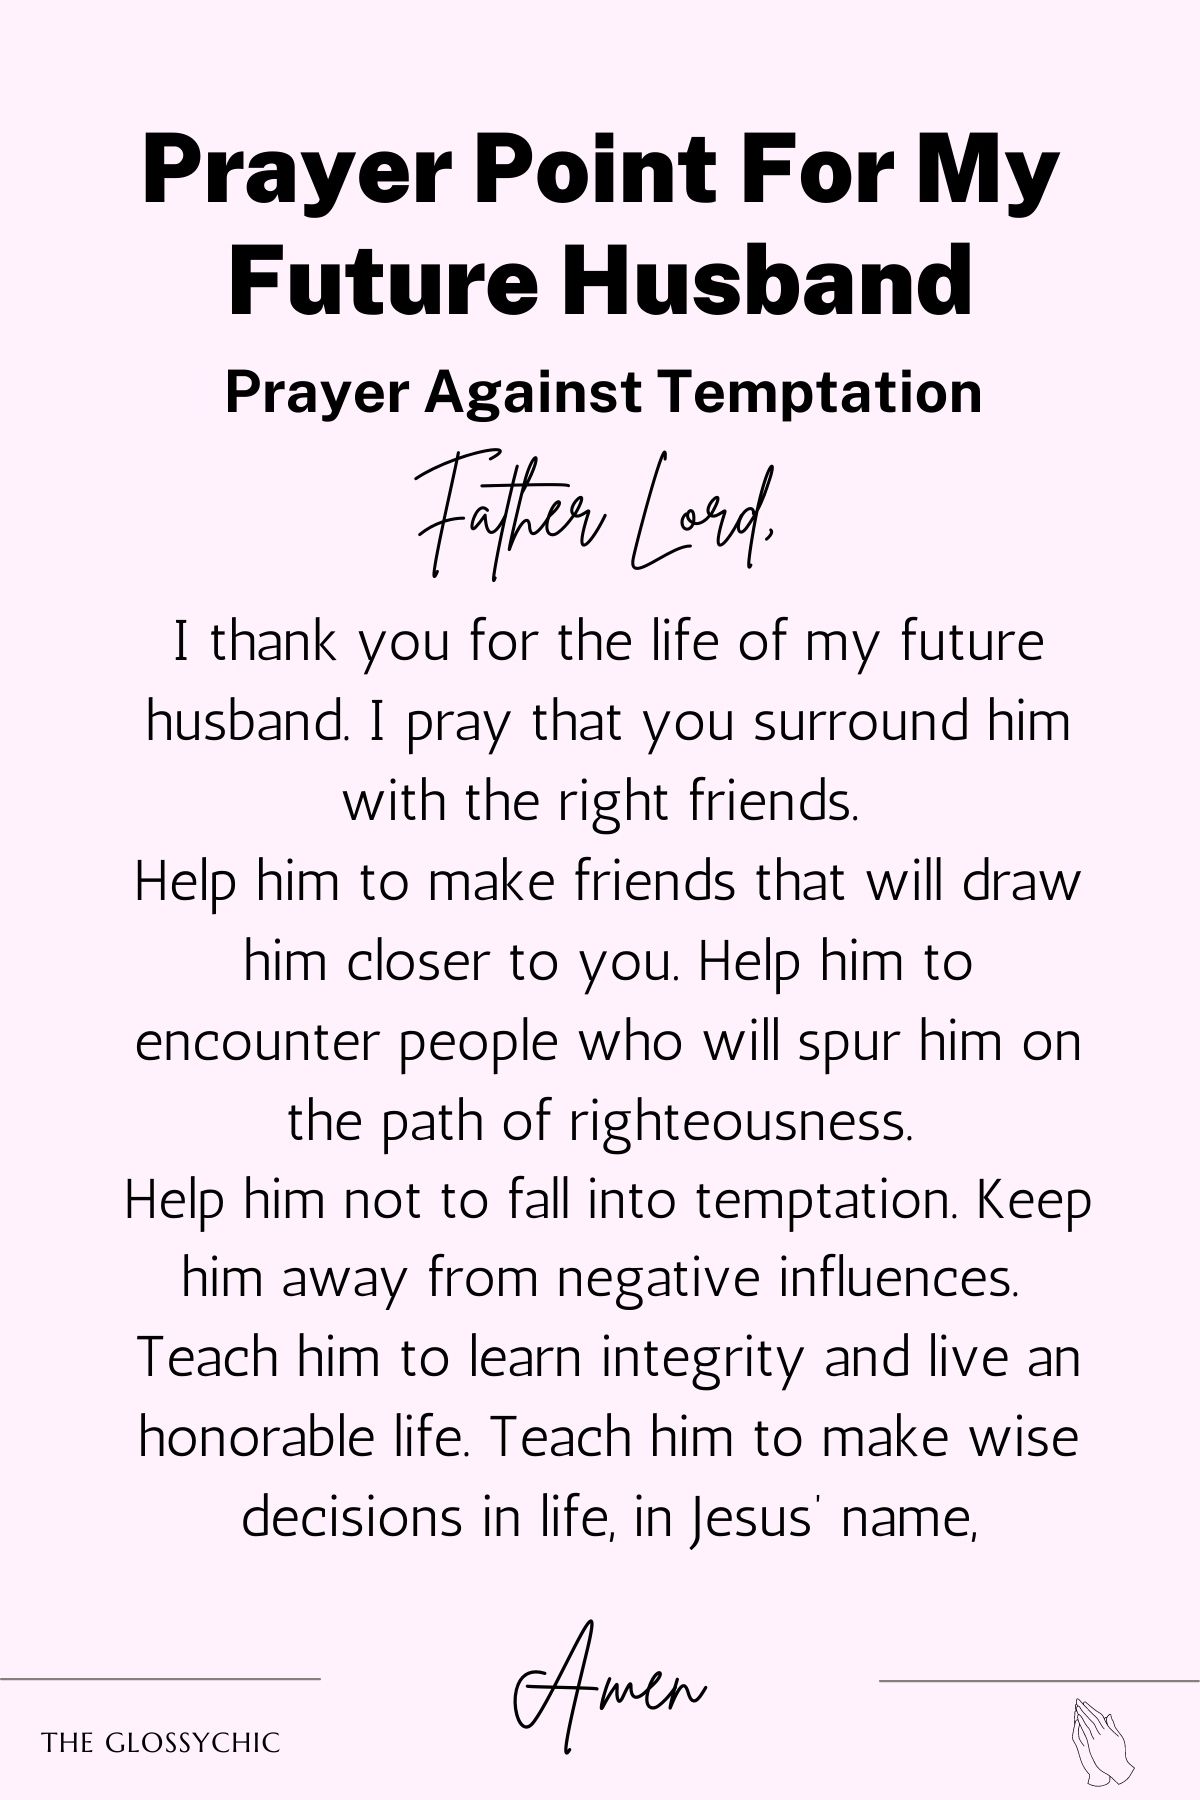 Prayer Against Temptation for my future husband